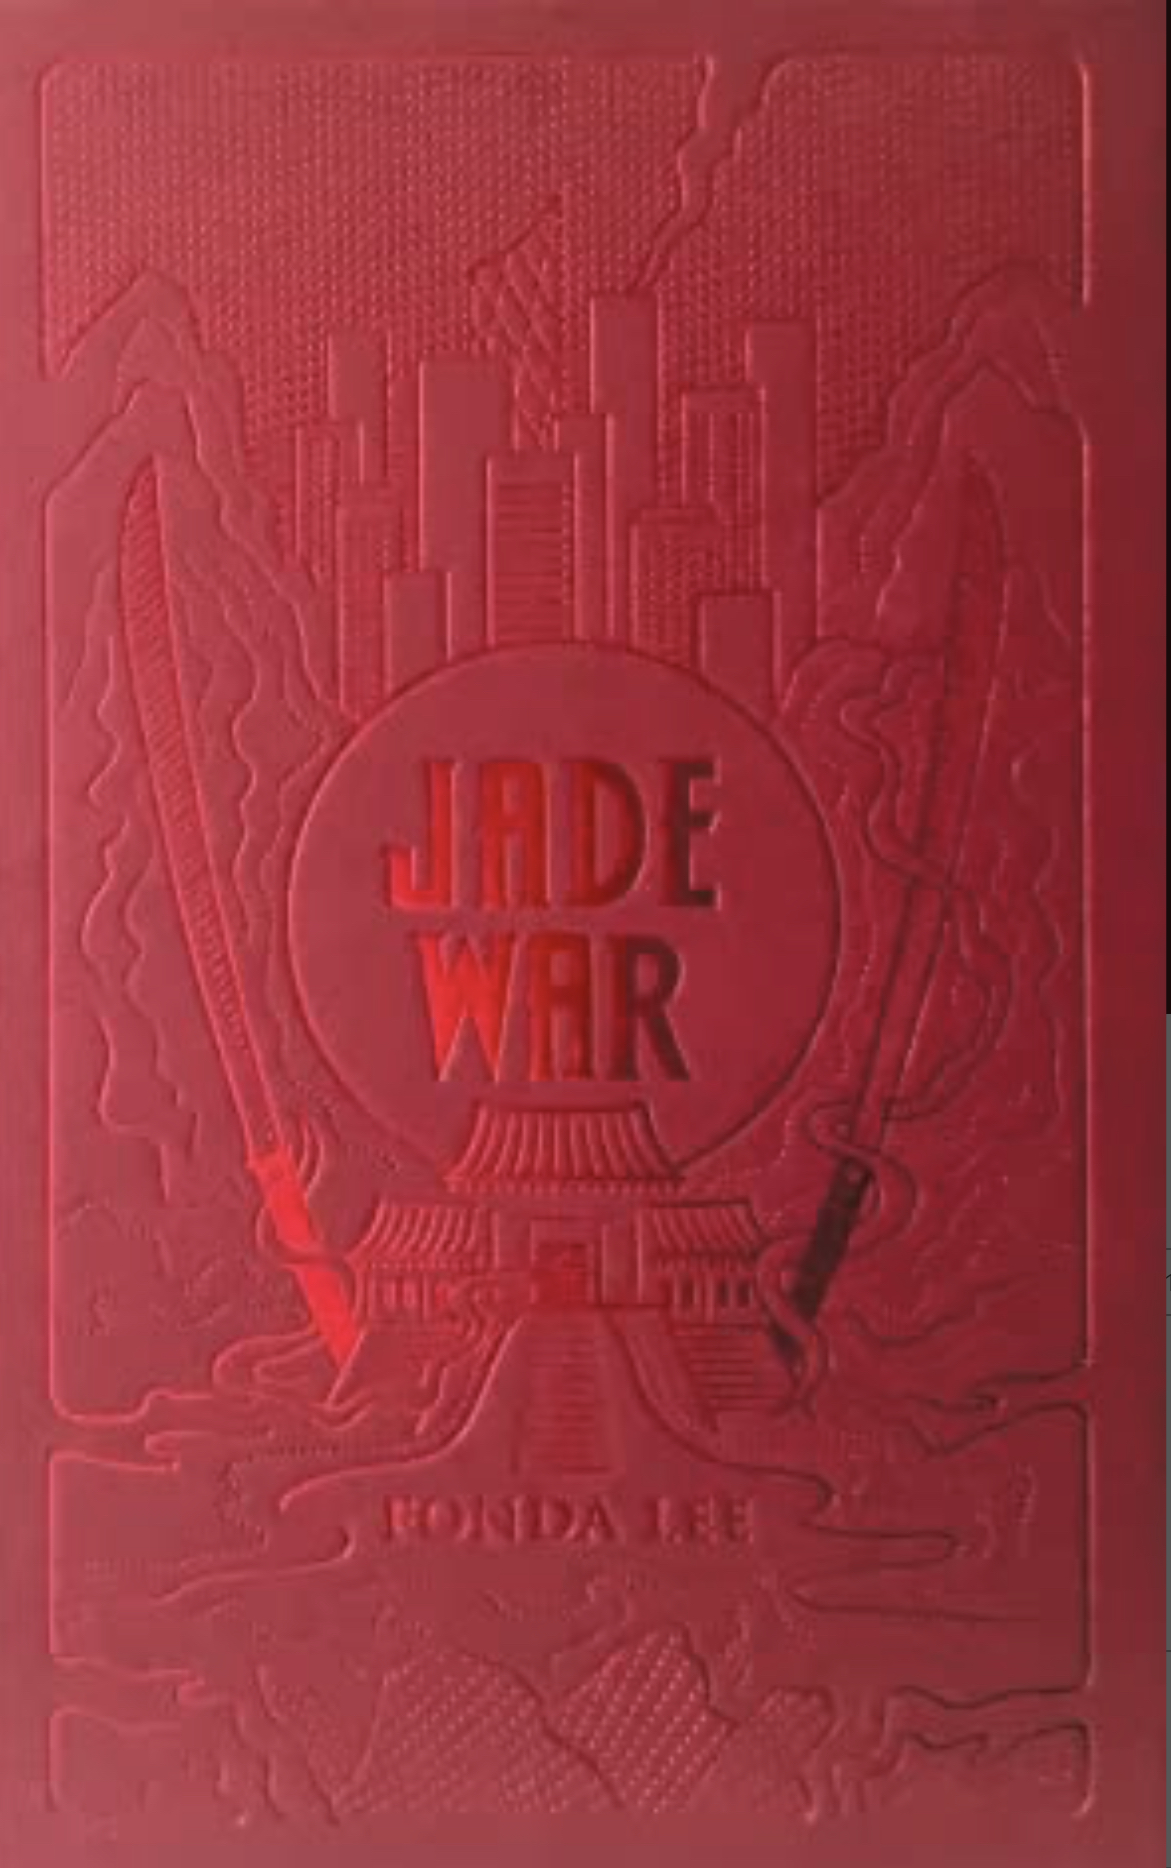 Jade War by Fonda Lee